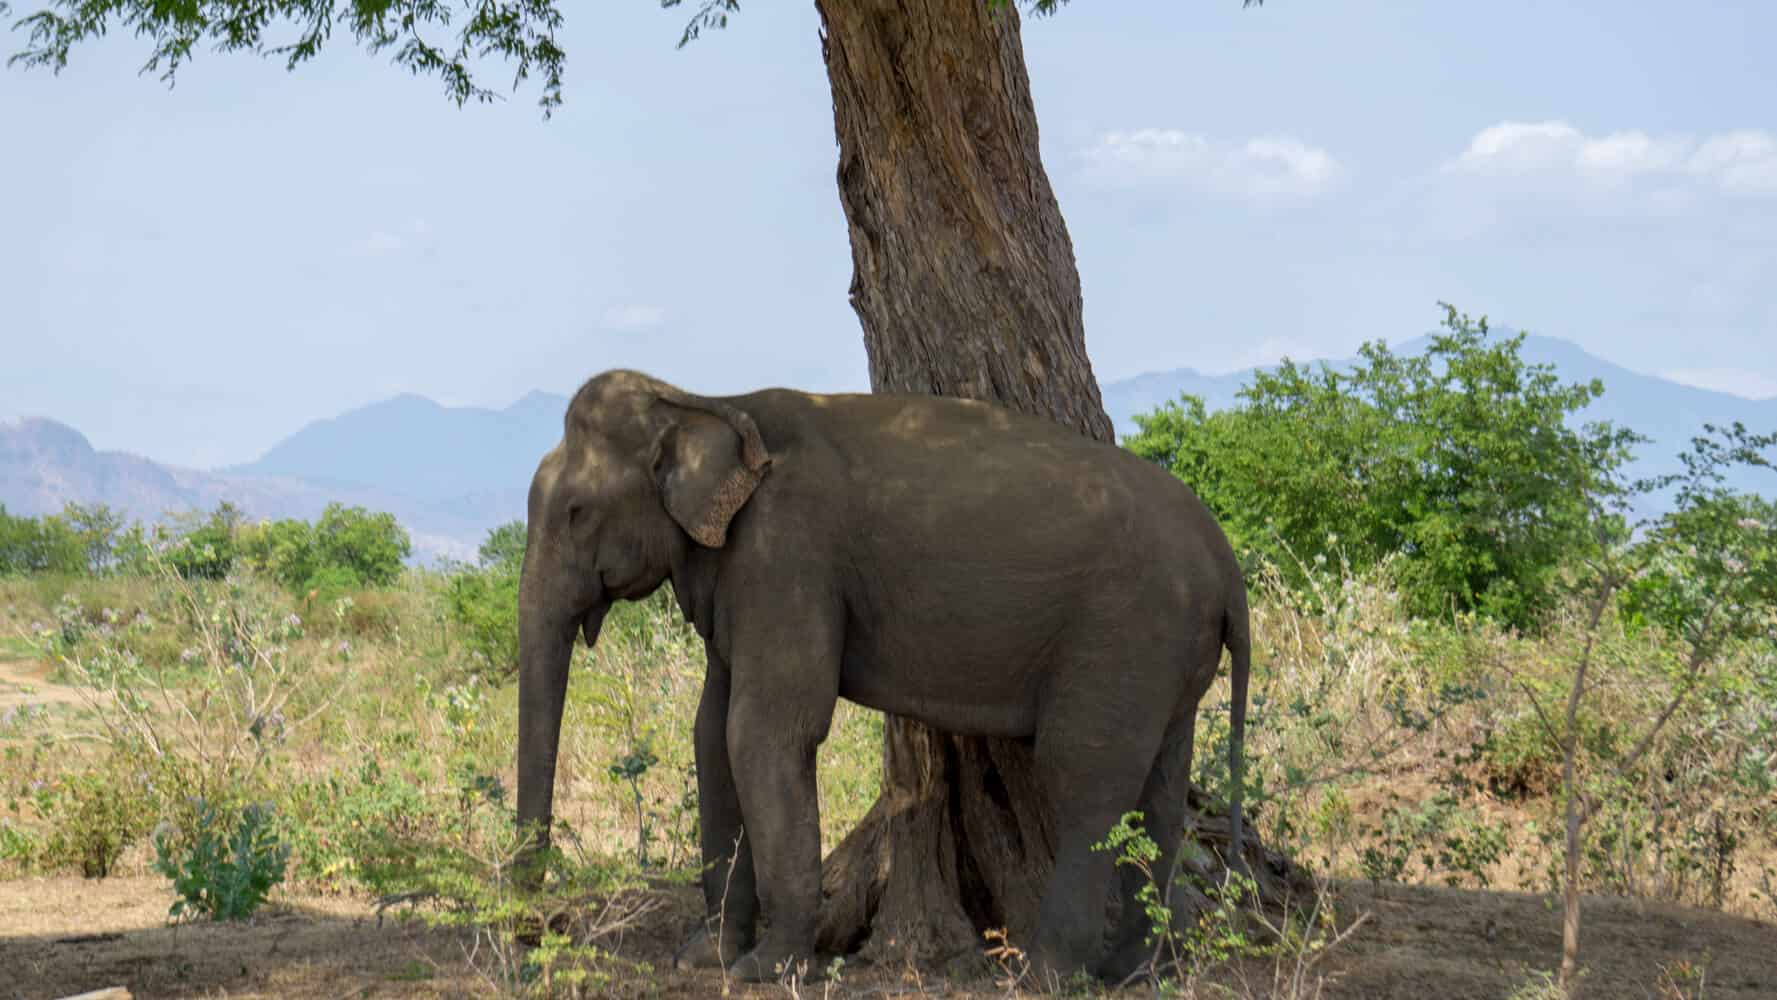 wildlife encounter with elephants in Sri Lanka